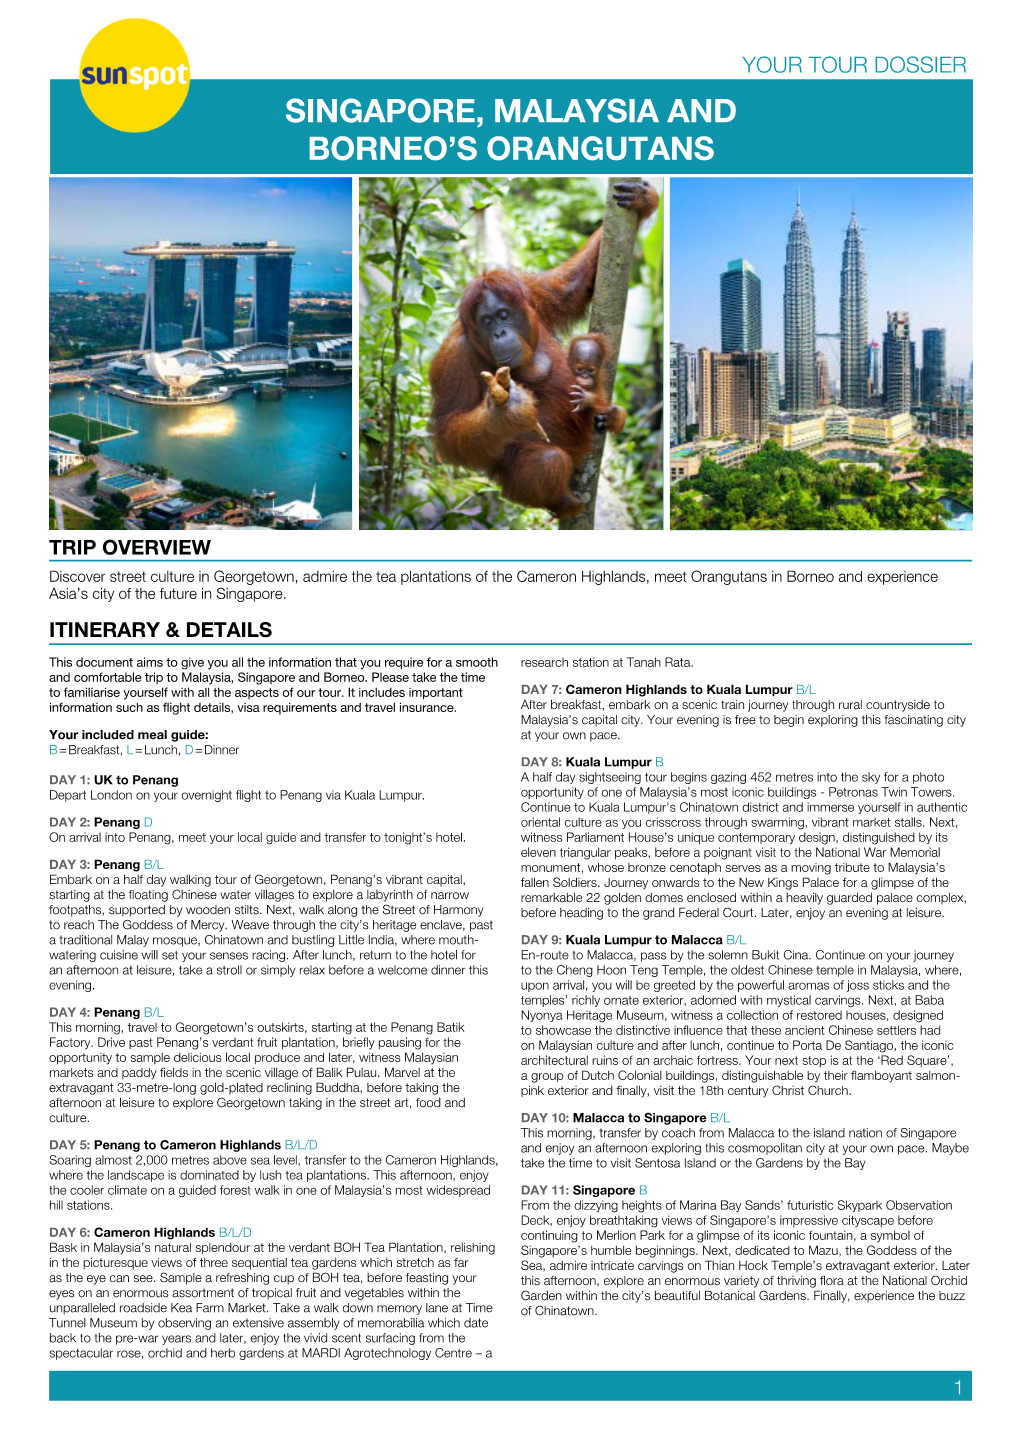 Singapore, Malaysia and Borneo's Orangutans